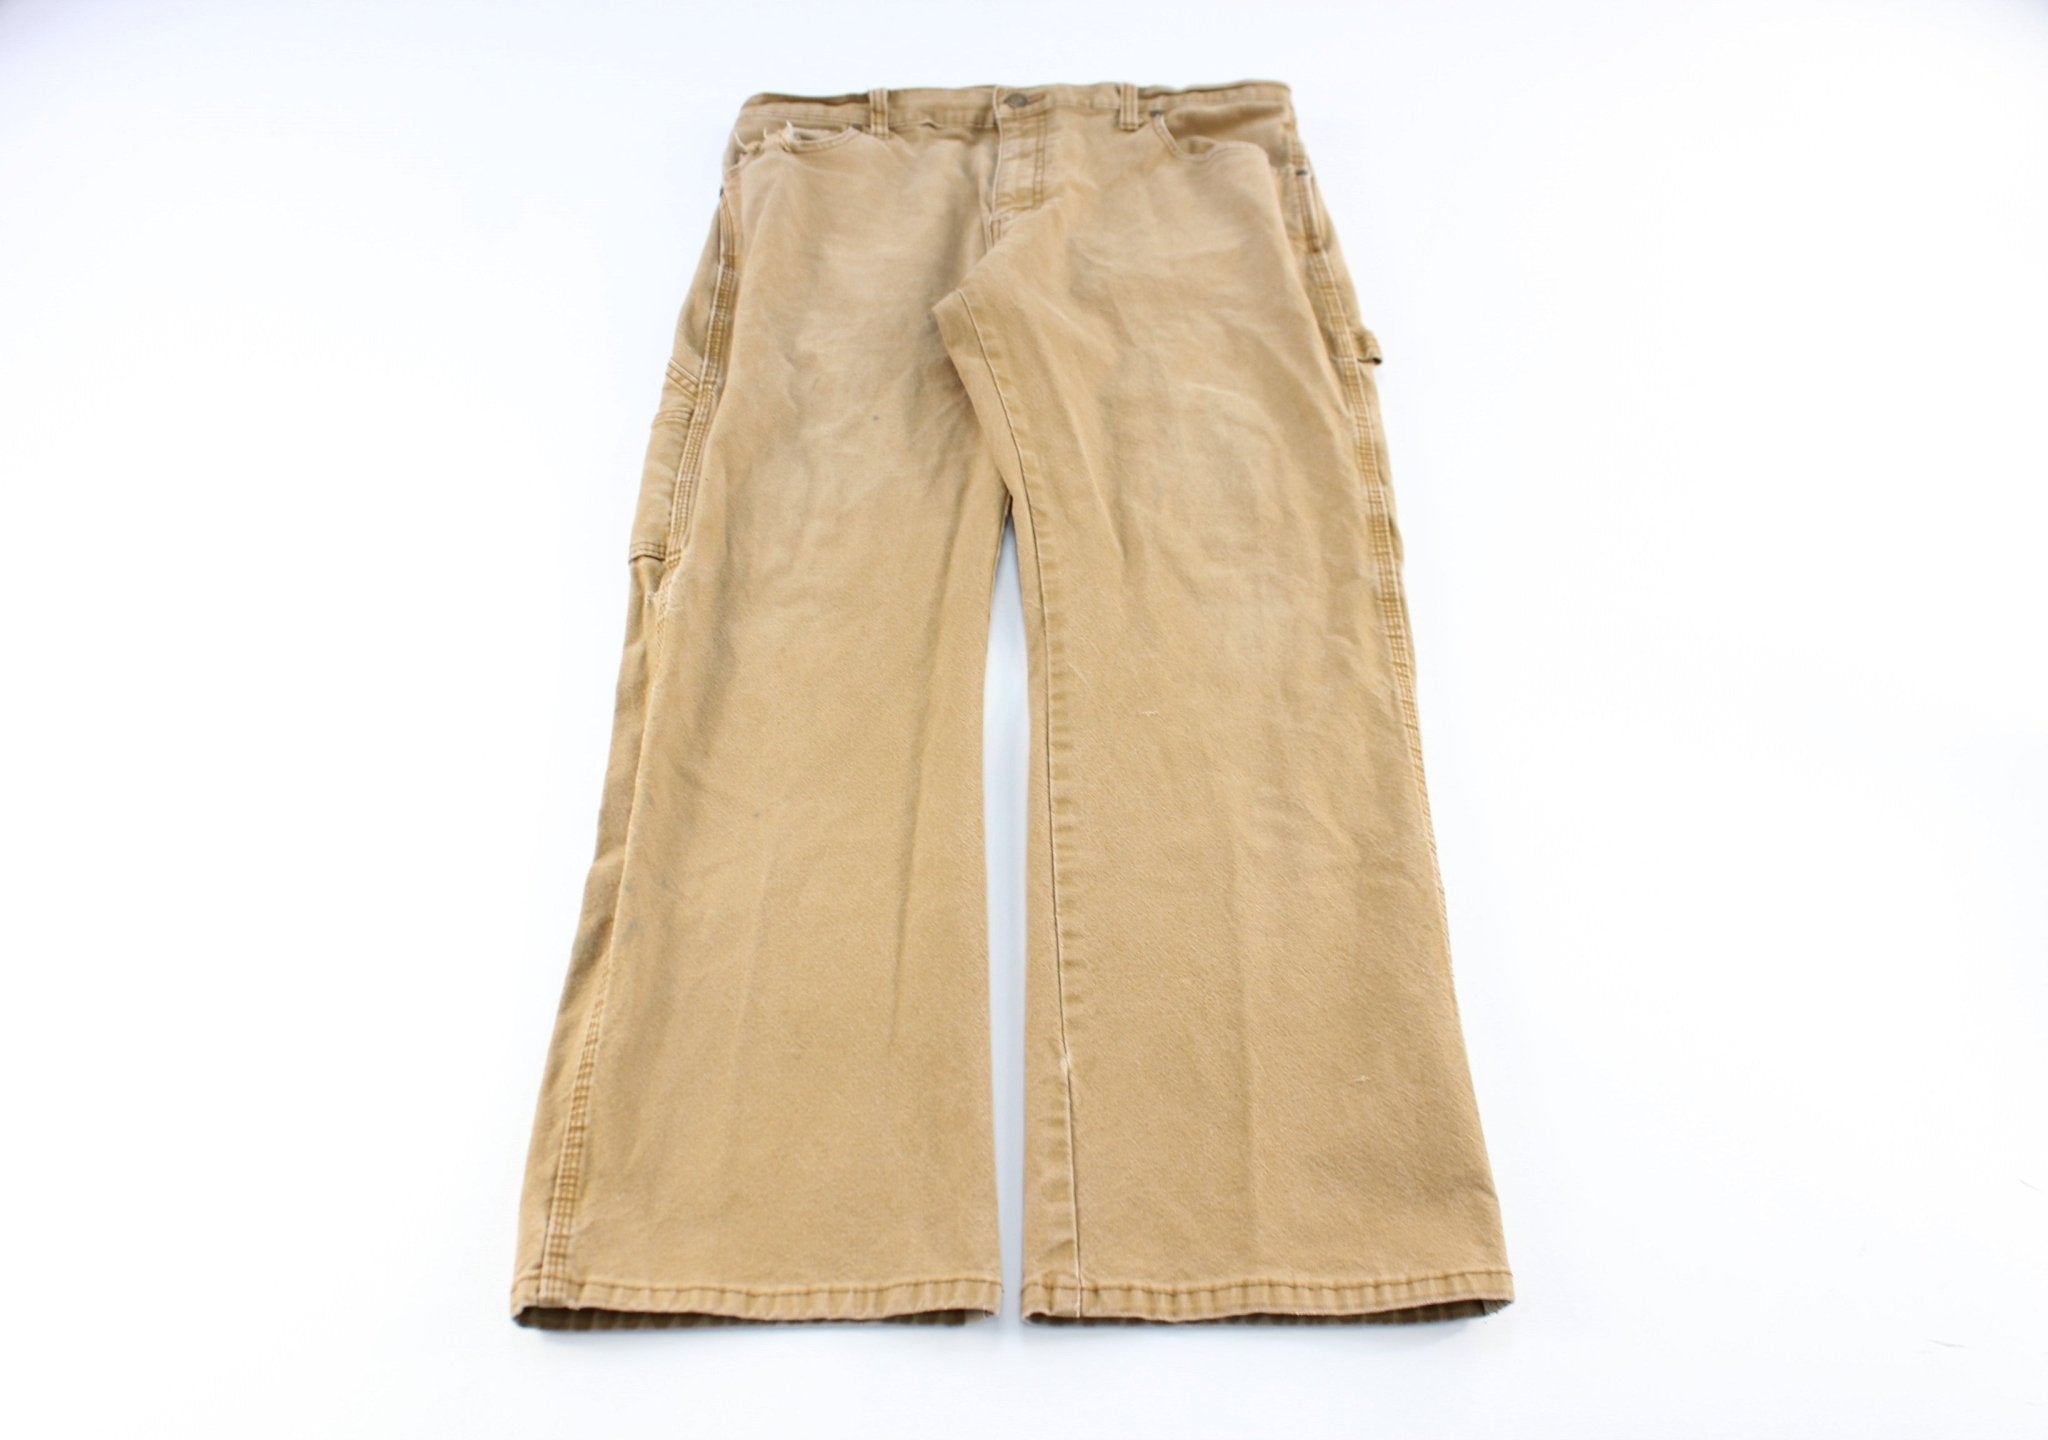 Dickie's Tan Workwear Pants - ThriftedThreads.com